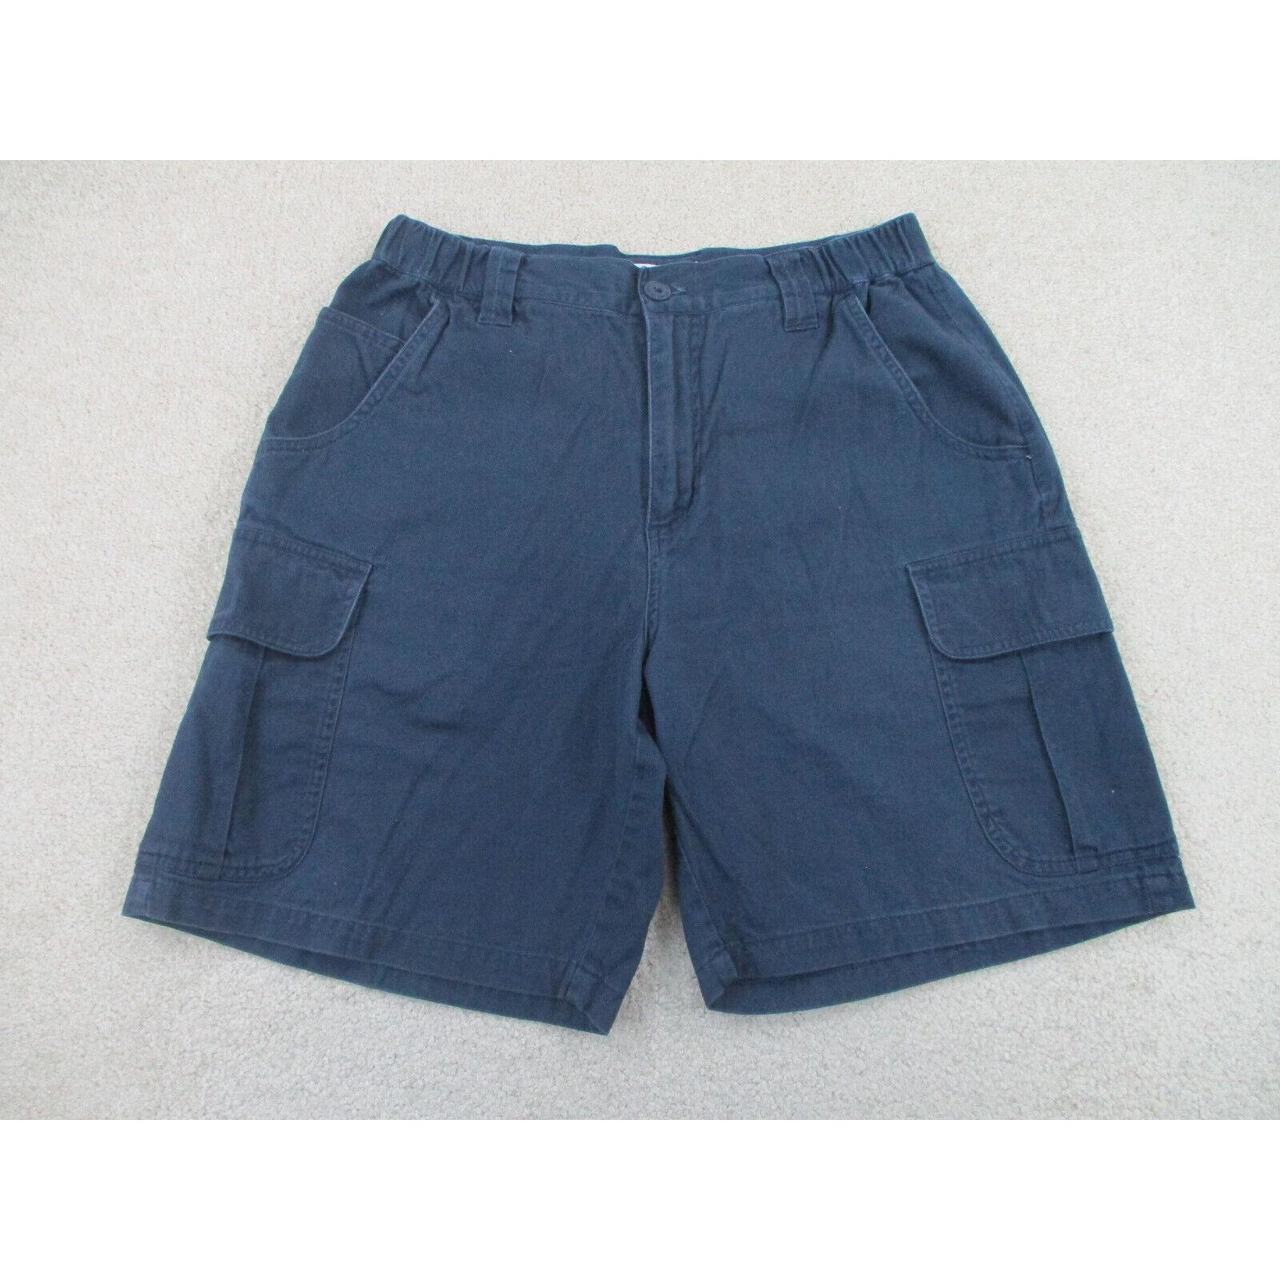 Product Image 1 - Columbia Shorts Men 30 Blue